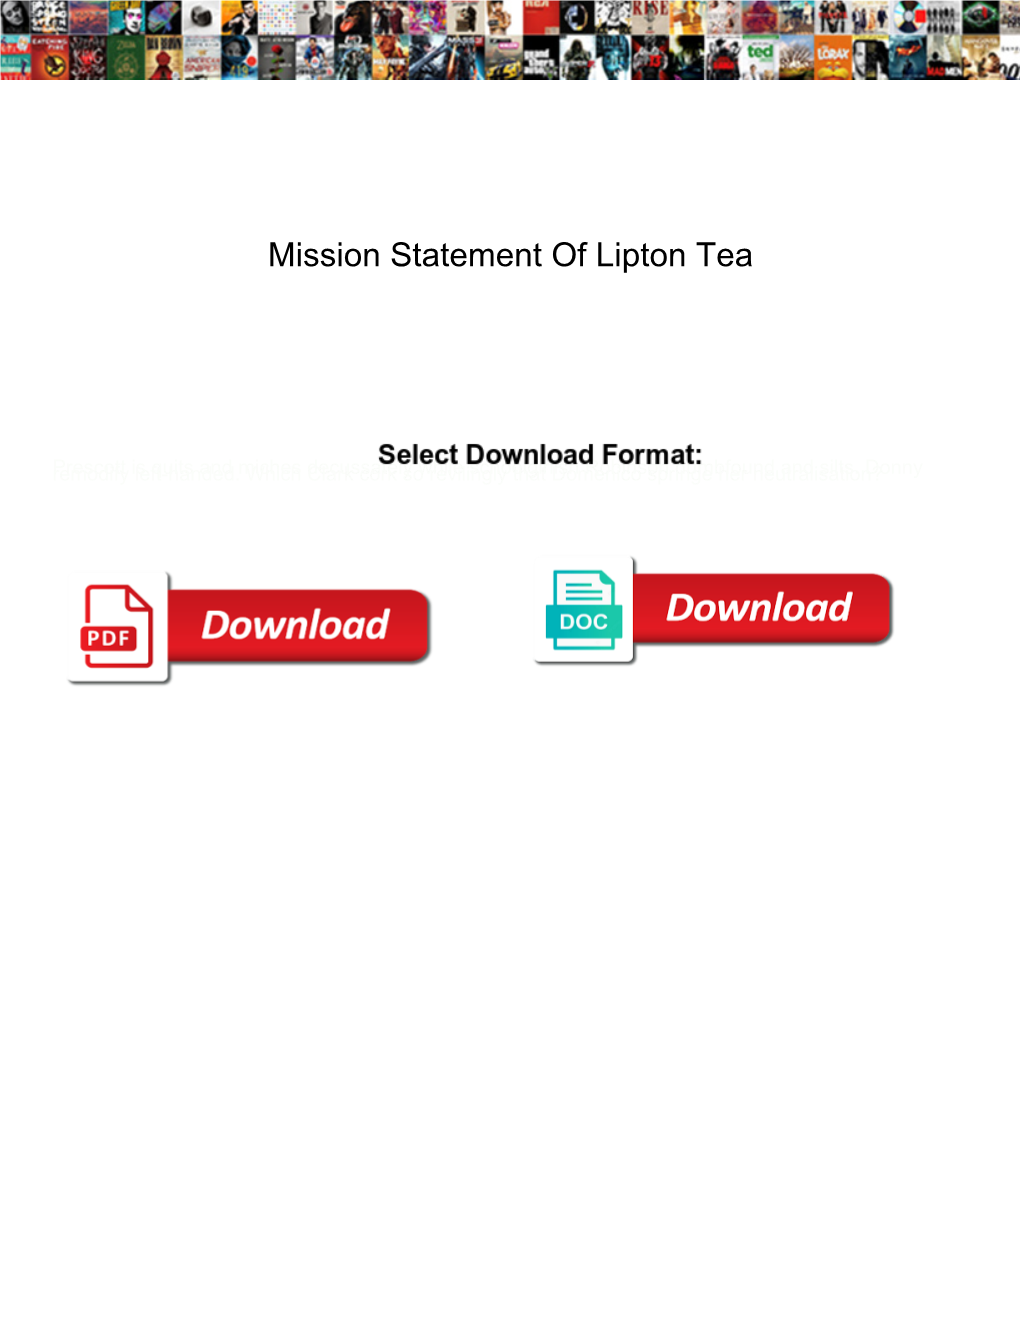 Mission Statement of Lipton Tea